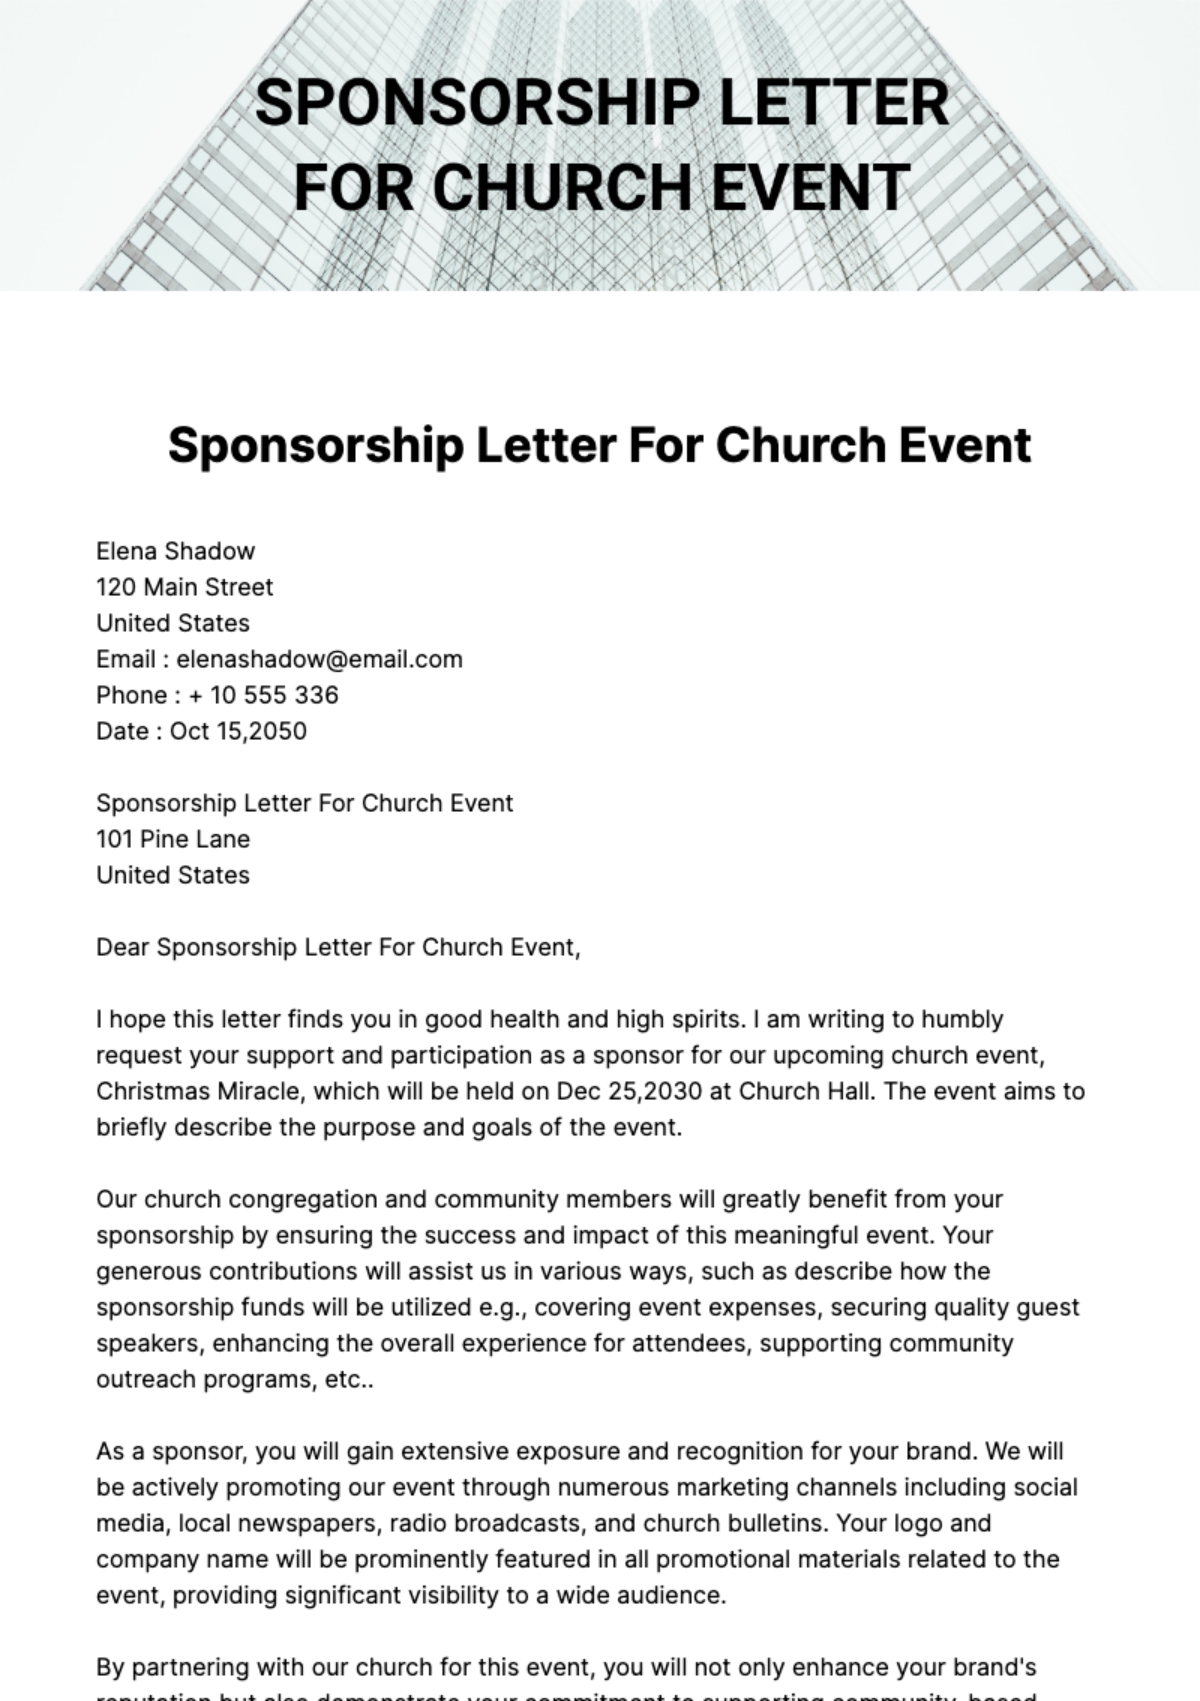 Sponsorship Letter For Church Event Template